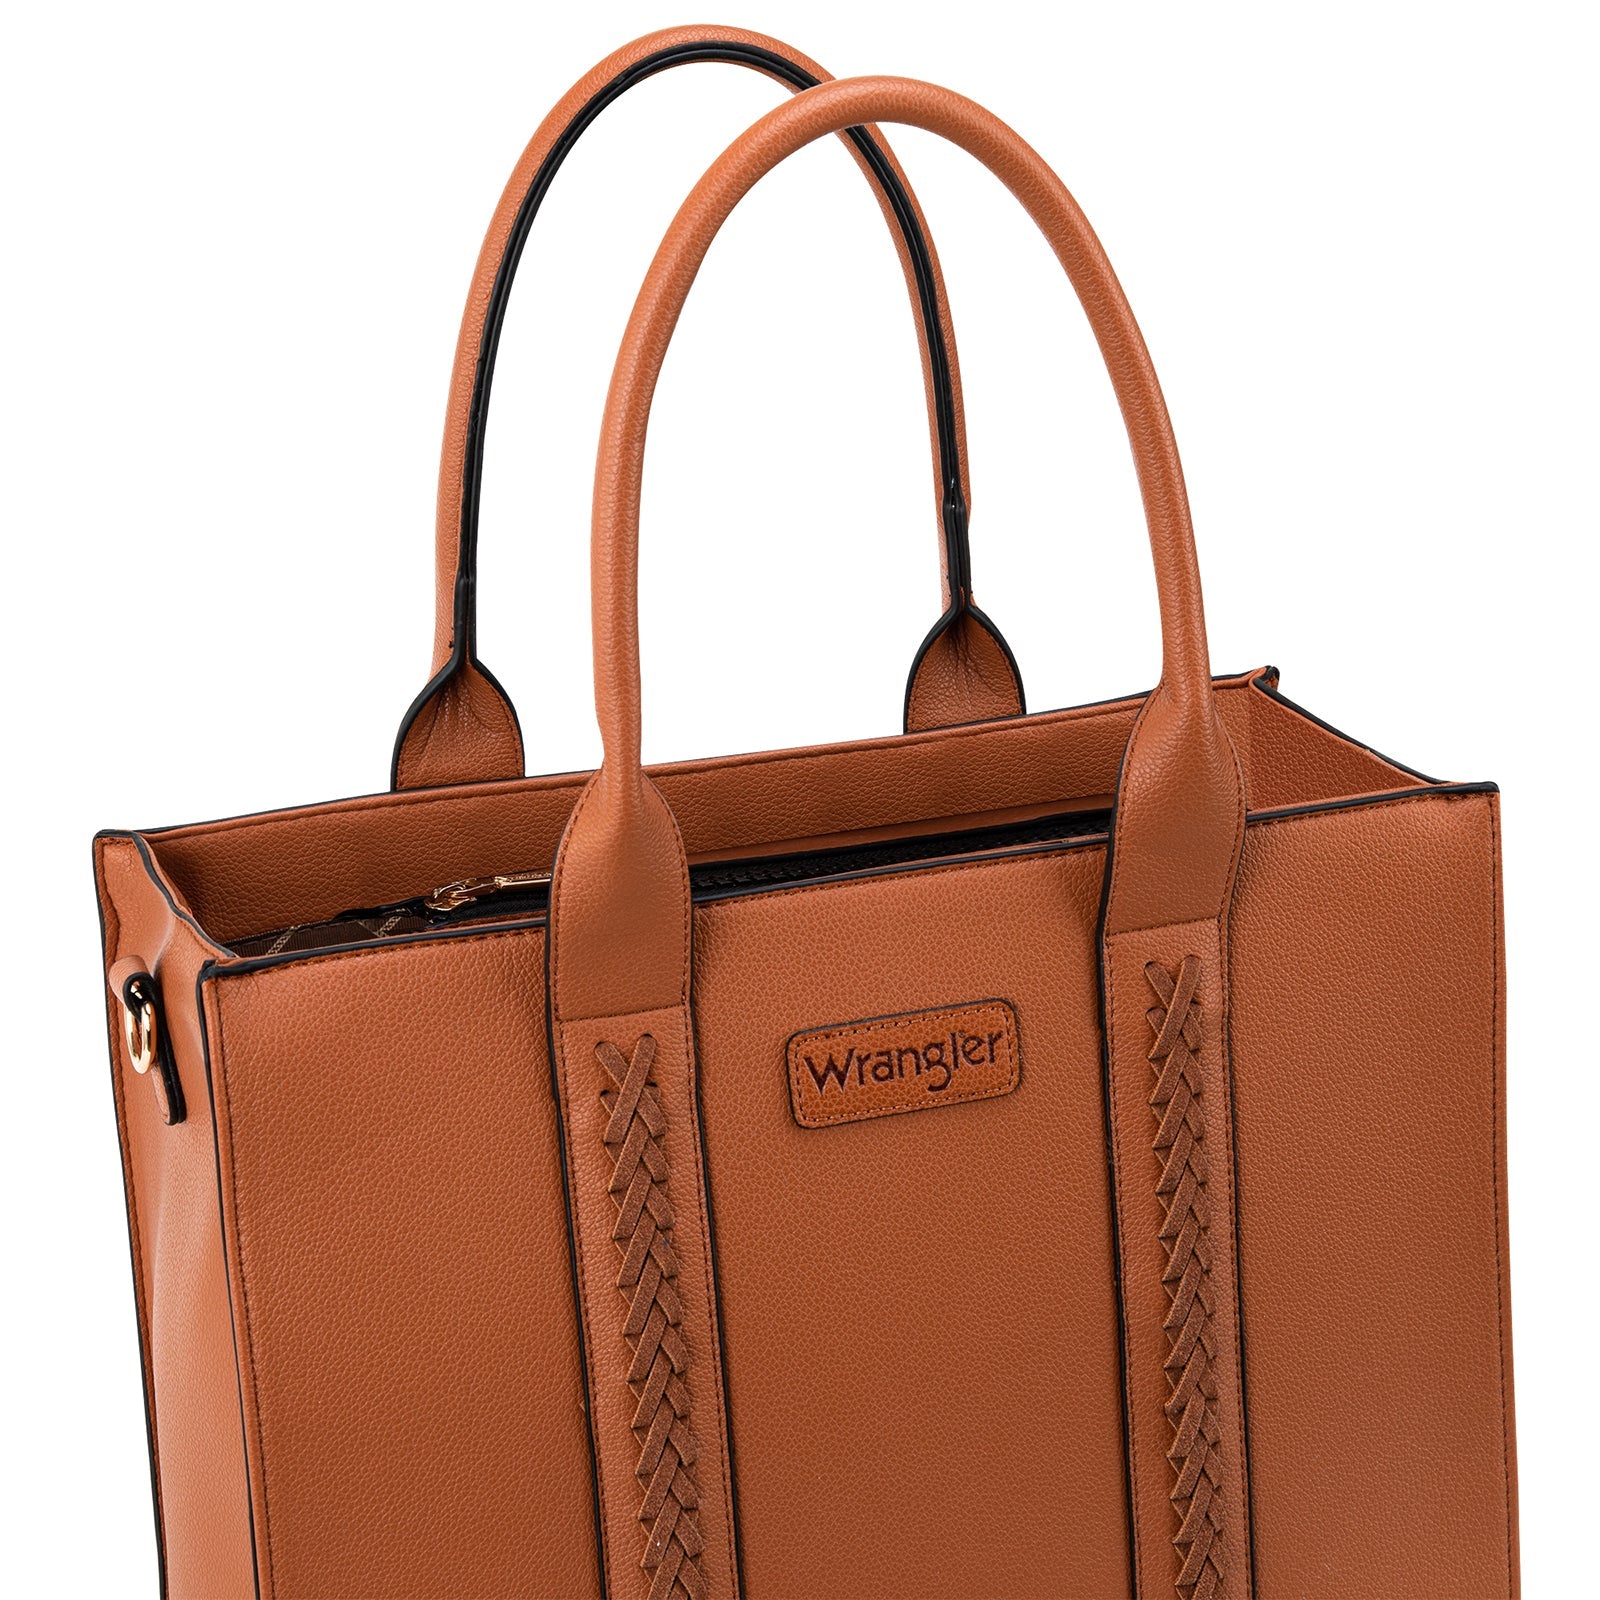 Wrangler Sling Bag For Leather Crossbody Bag in Natural